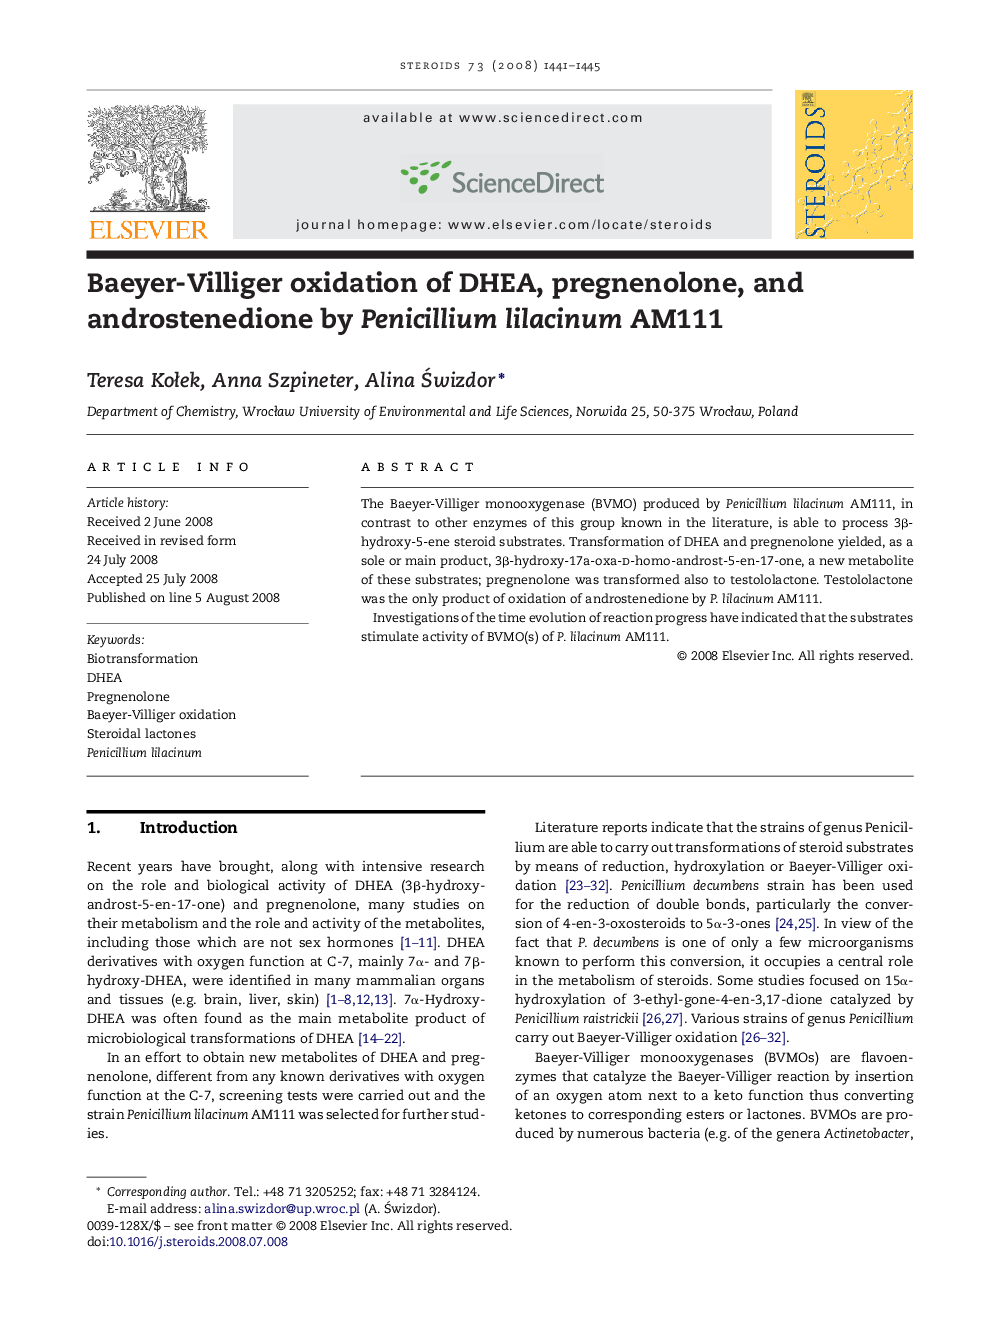 Baeyer-Villiger oxidation of DHEA, pregnenolone, and androstenedione by Penicillium lilacinum AM111